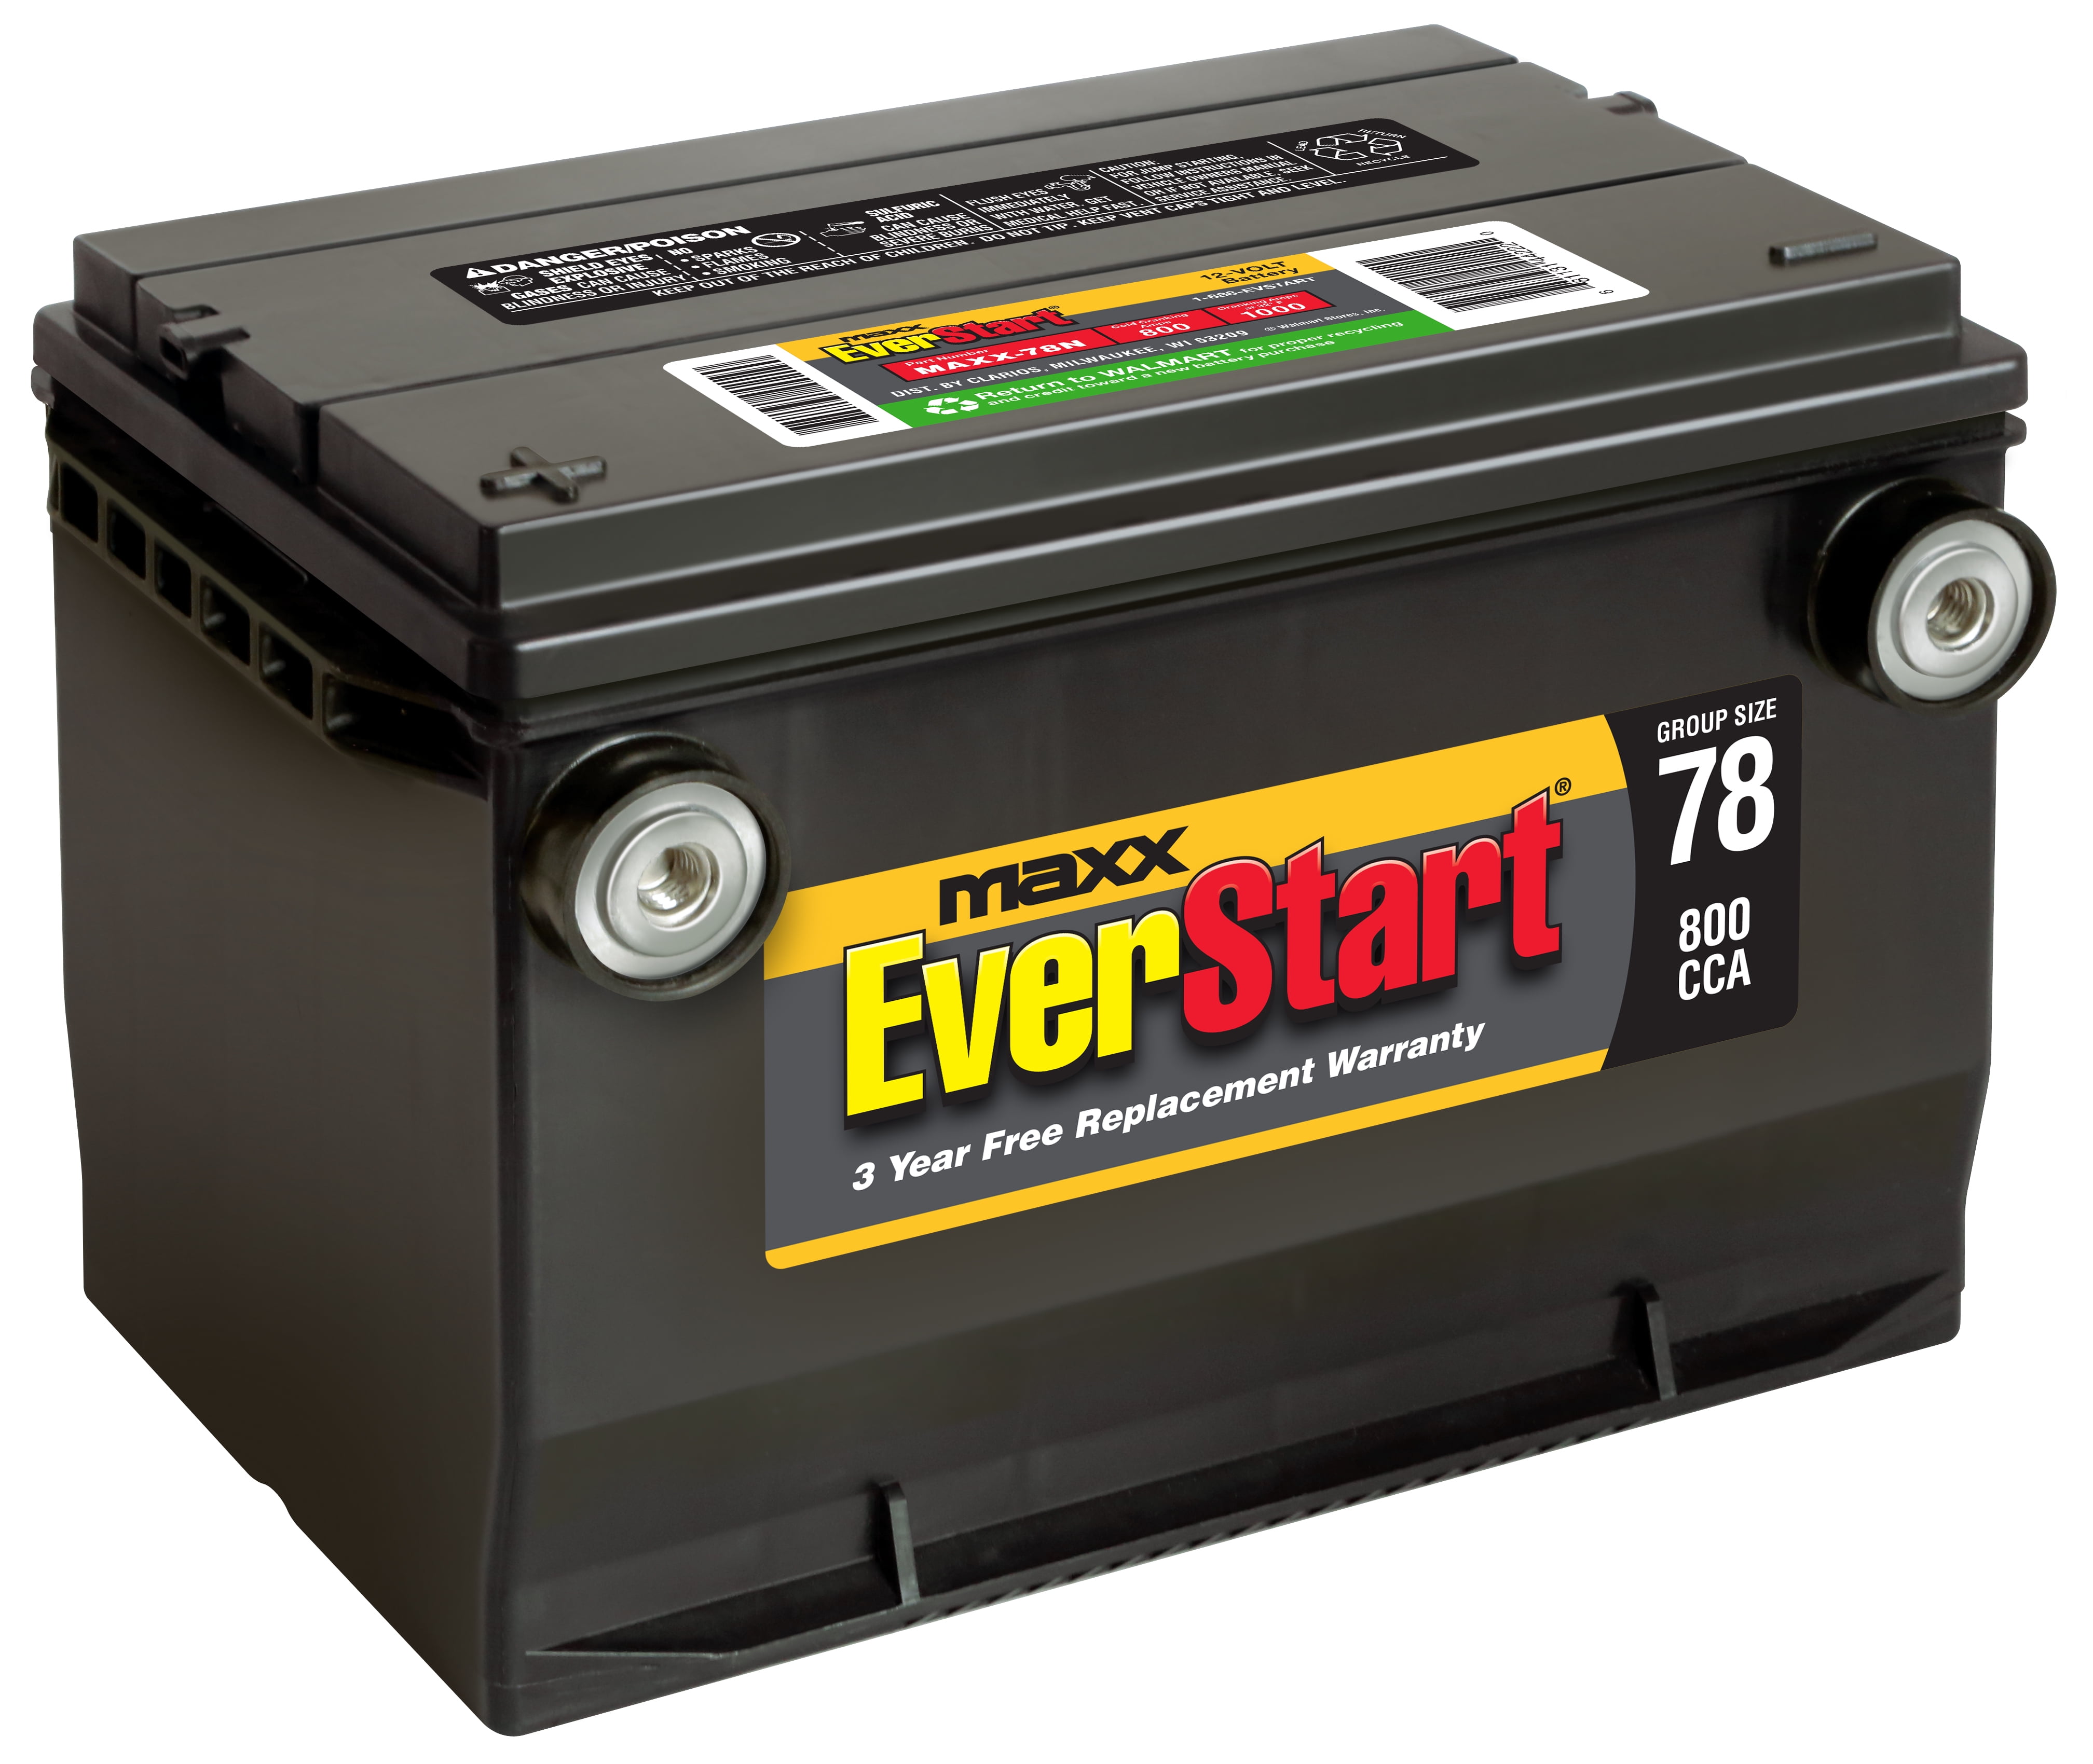 everstart-maxx-lead-acid-automotive-battery-group-size-78n-walmart